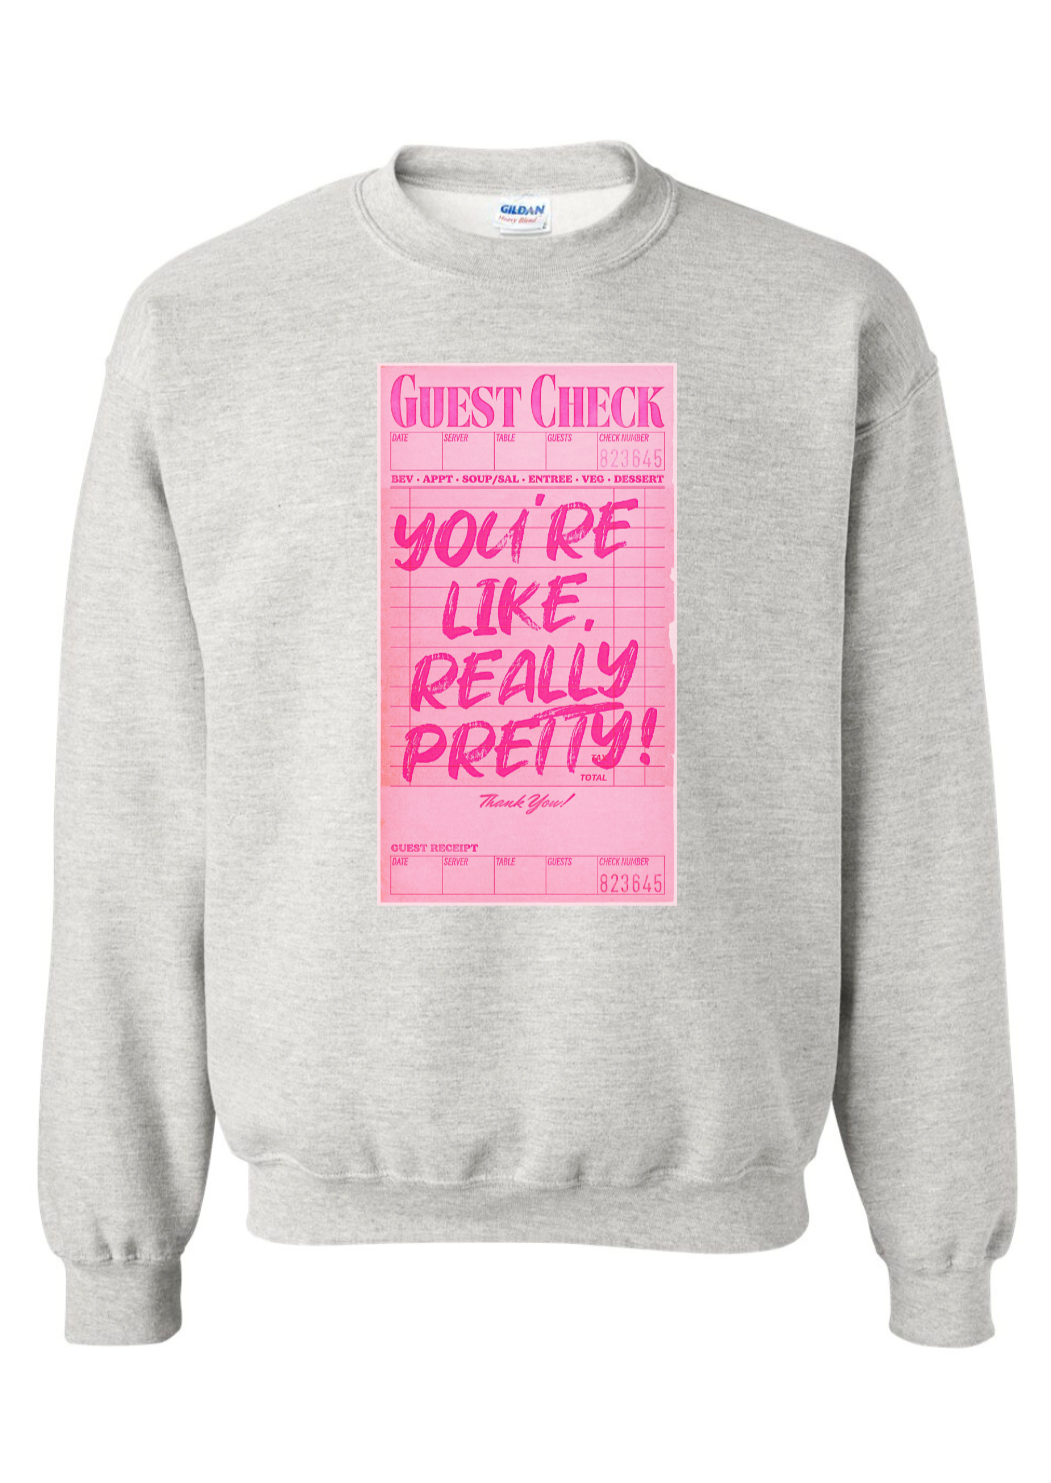 you're like really pretty crewneck sweatshirt